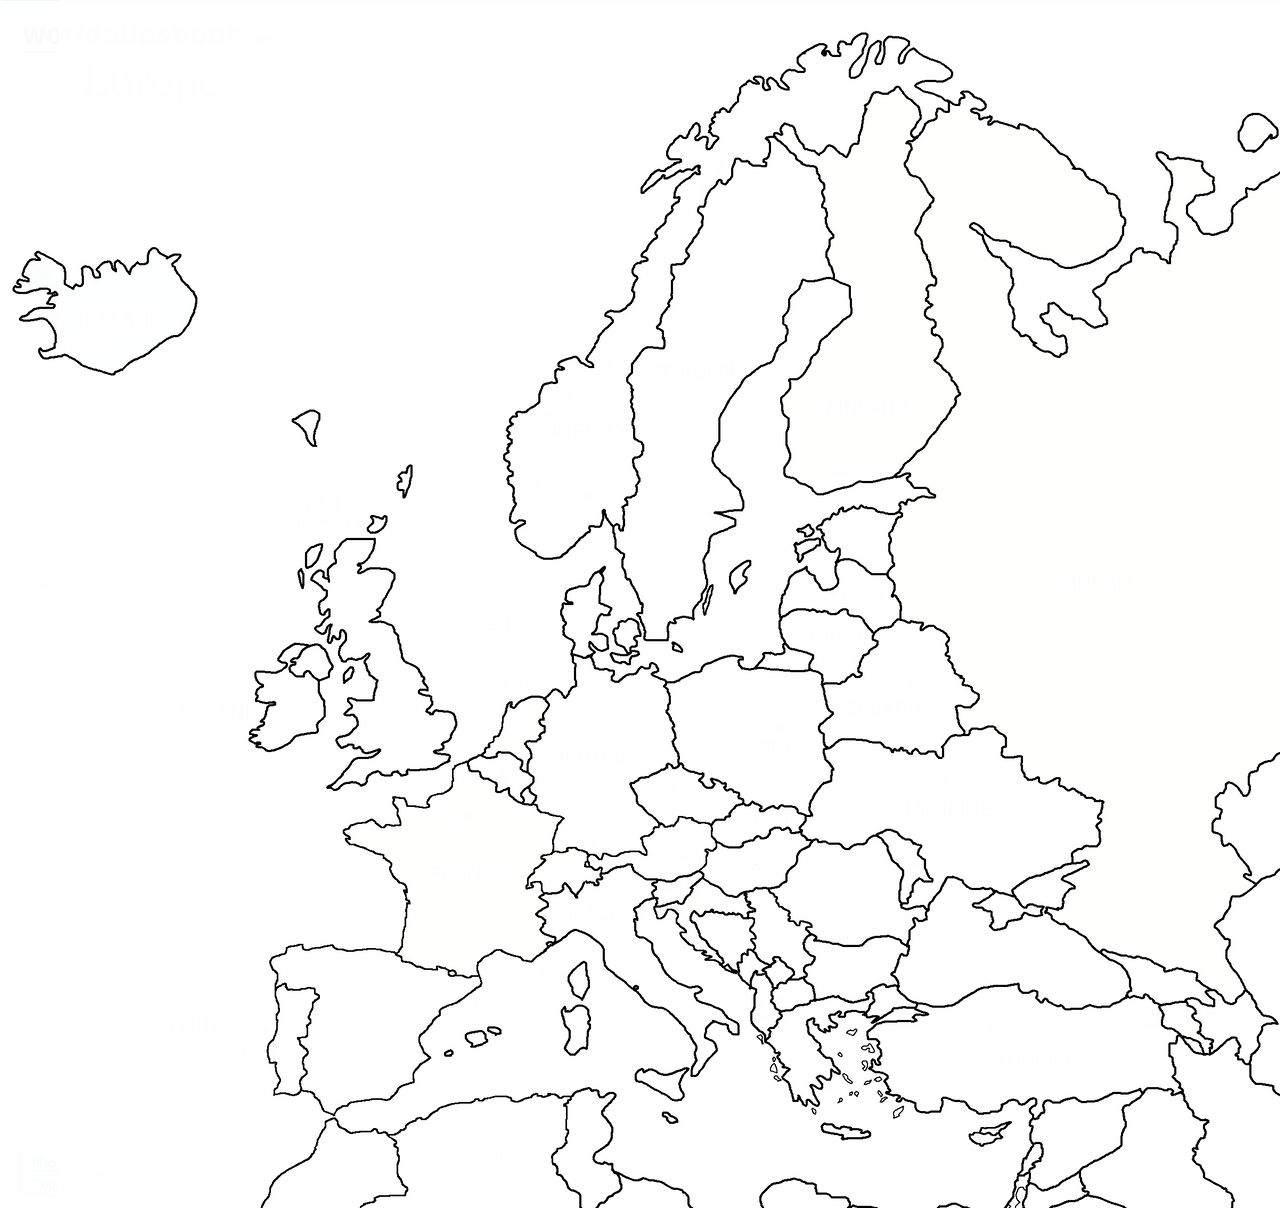 Actually blank map of Europe by KoldunMaster on DeviantArt